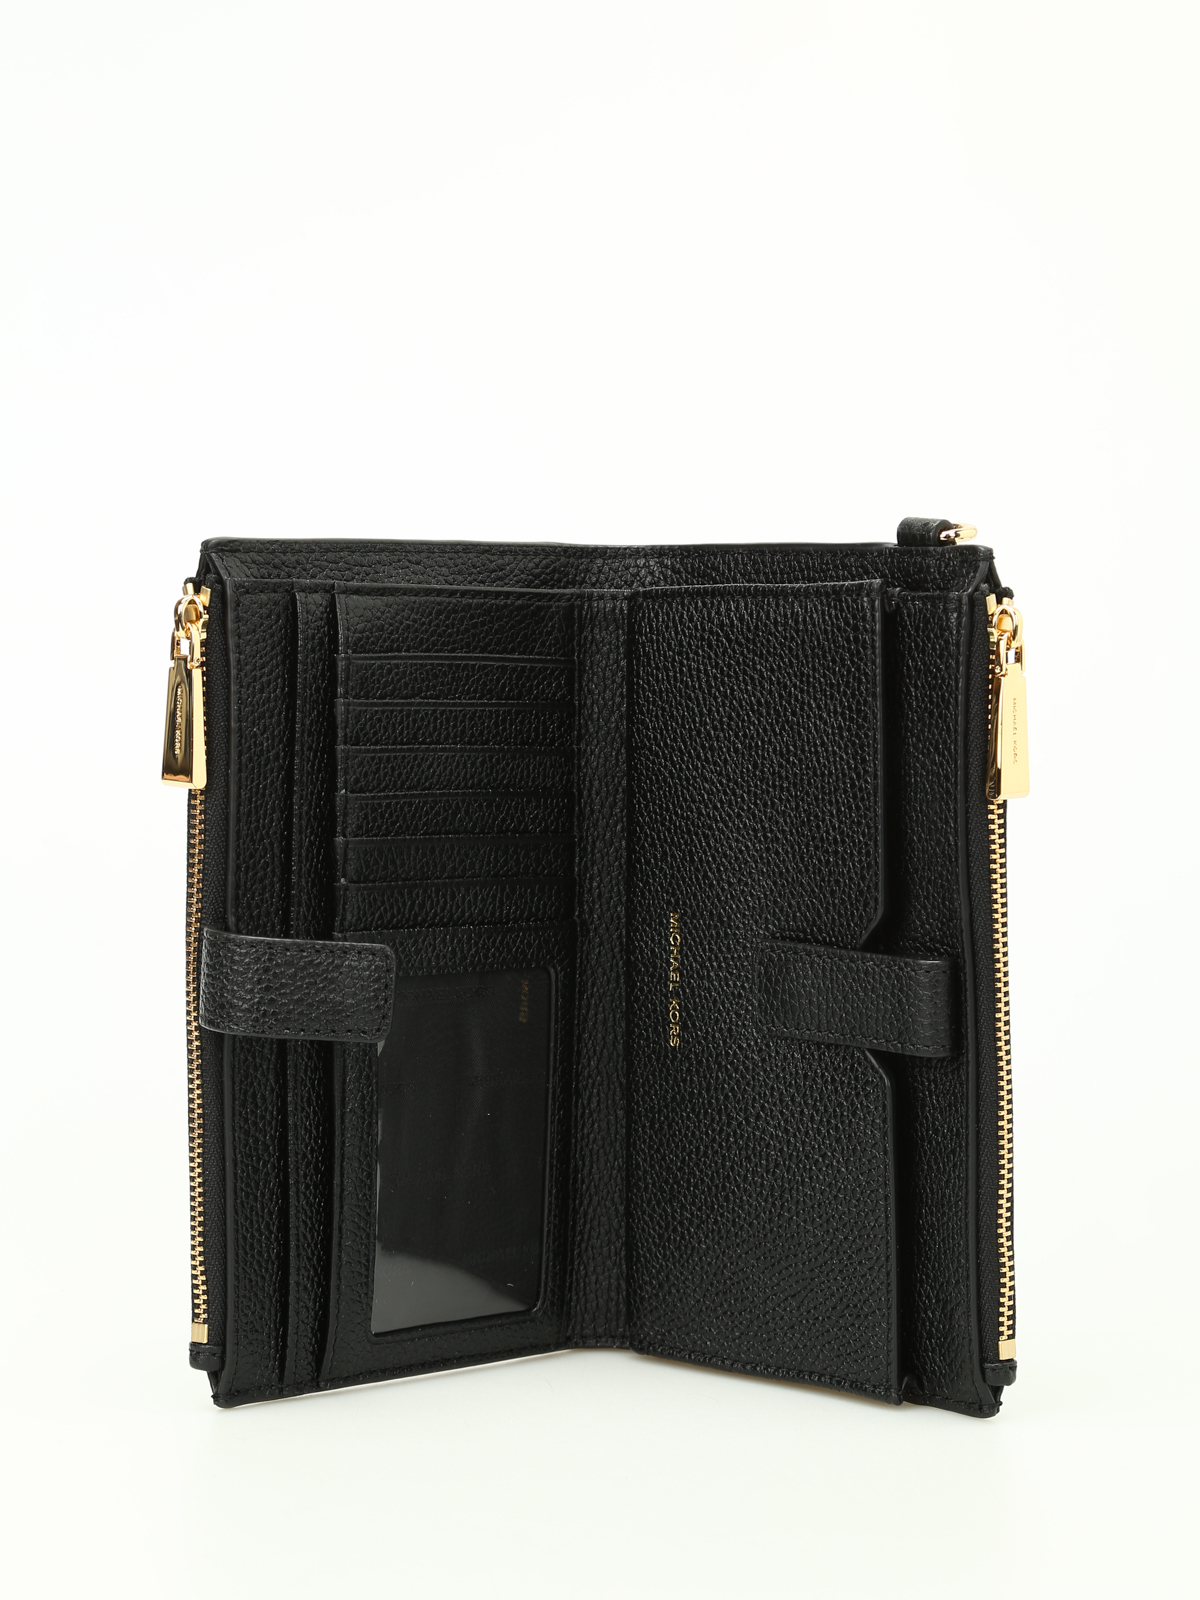 Wallets & purses Michael Kors - Adele black double zip wallet -  32T7GAFW4L001